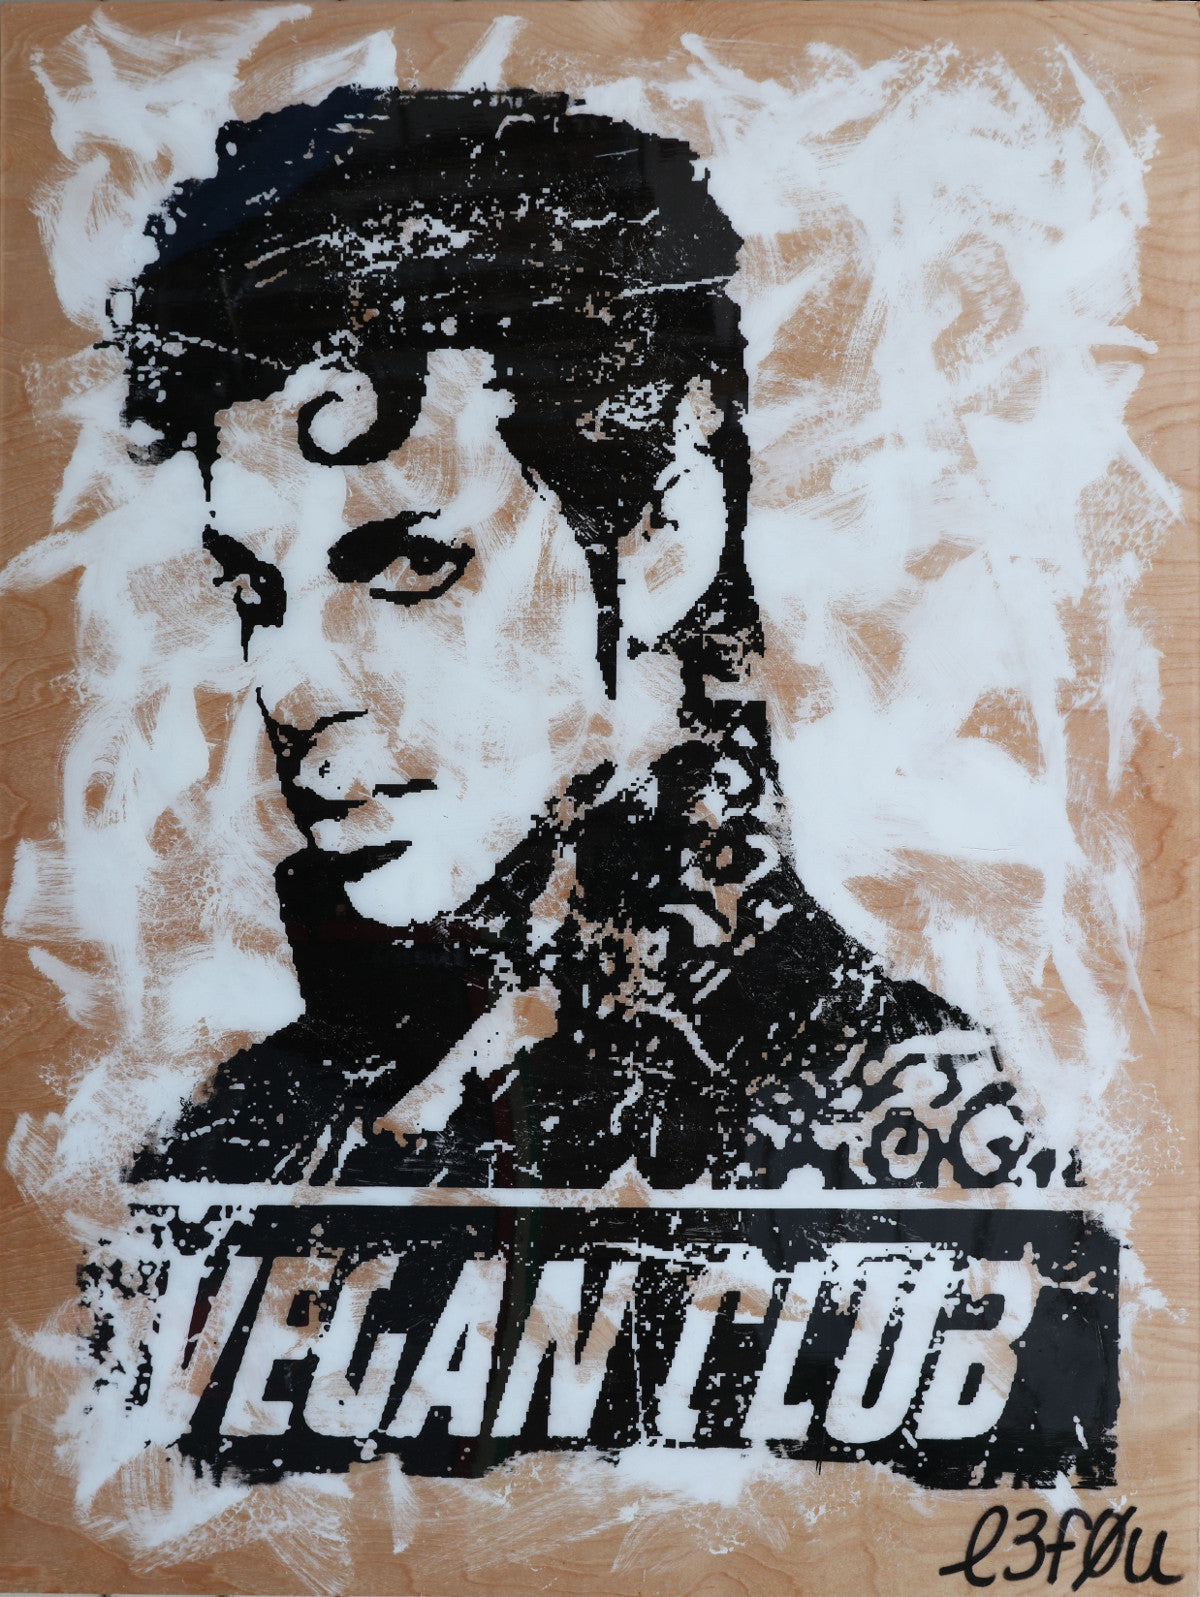 30x40 Original Artwork "Vegan Club" featuring Prince signed L3F0u (1 of X)